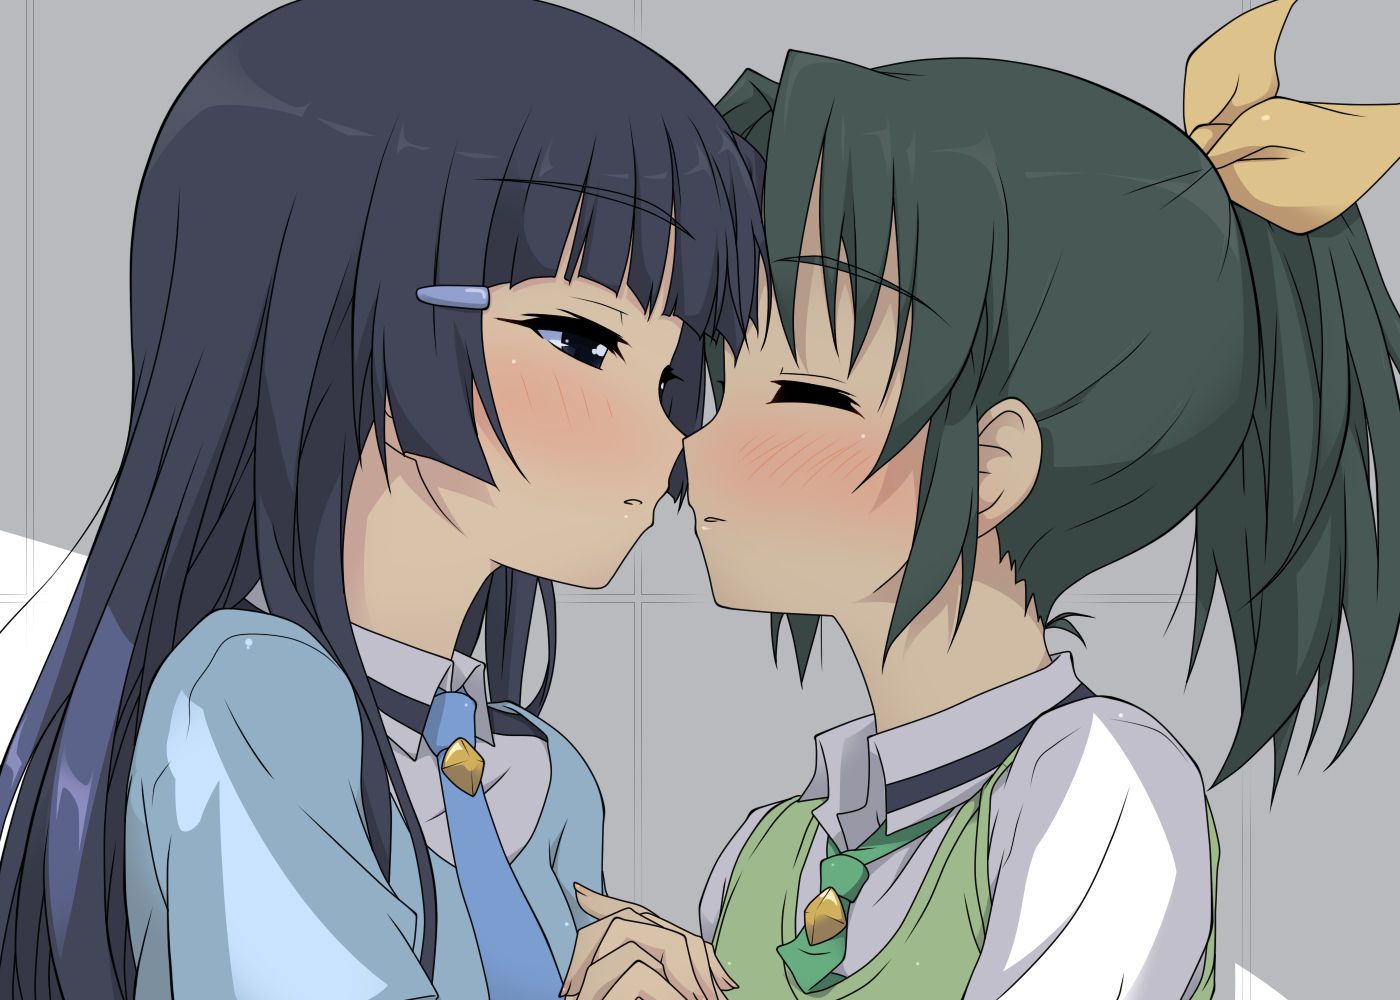 5s ago kissing other girls in 4, 3, and I chura. as so see Yuri Yuri kiss on the verge of Naruto Yuri Kiss 2 18